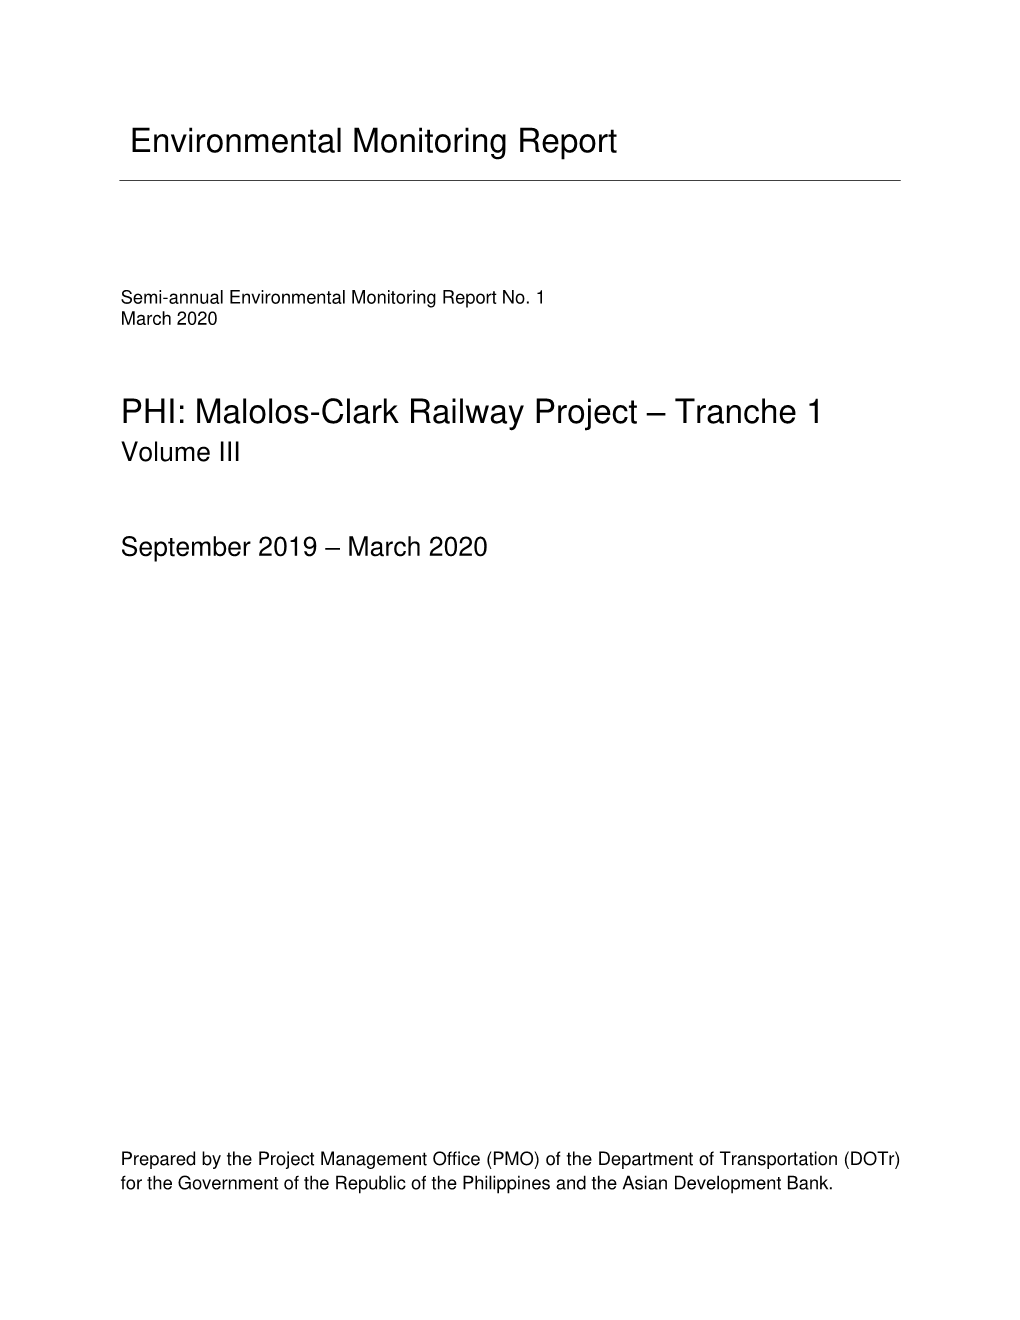 Malolos-Clark Railway Project – Tranche 1 Volume III